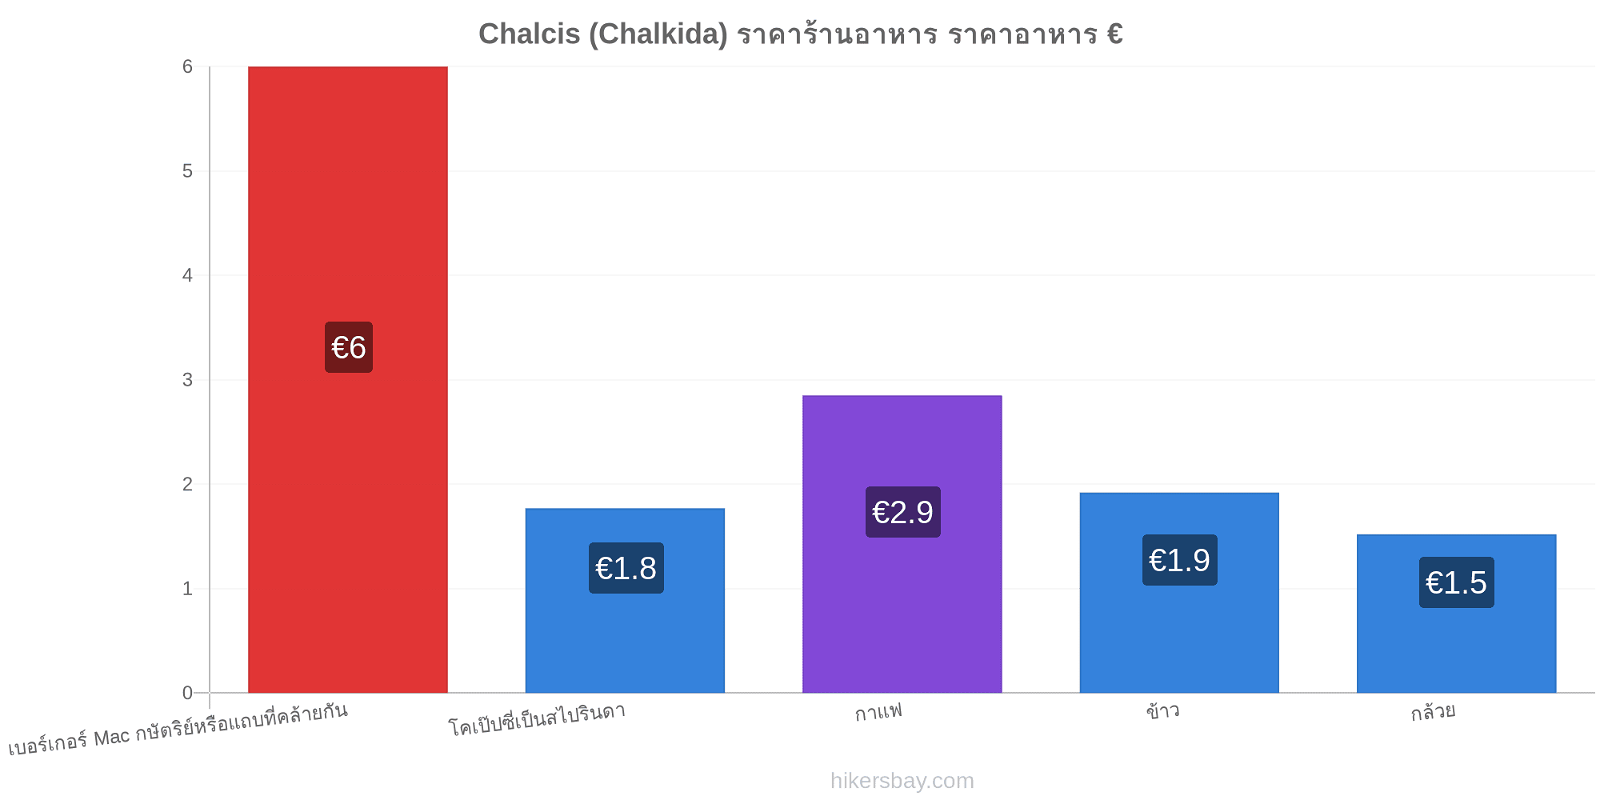 Chalcis (Chalkida) การเปลี่ยนแปลงราคา hikersbay.com